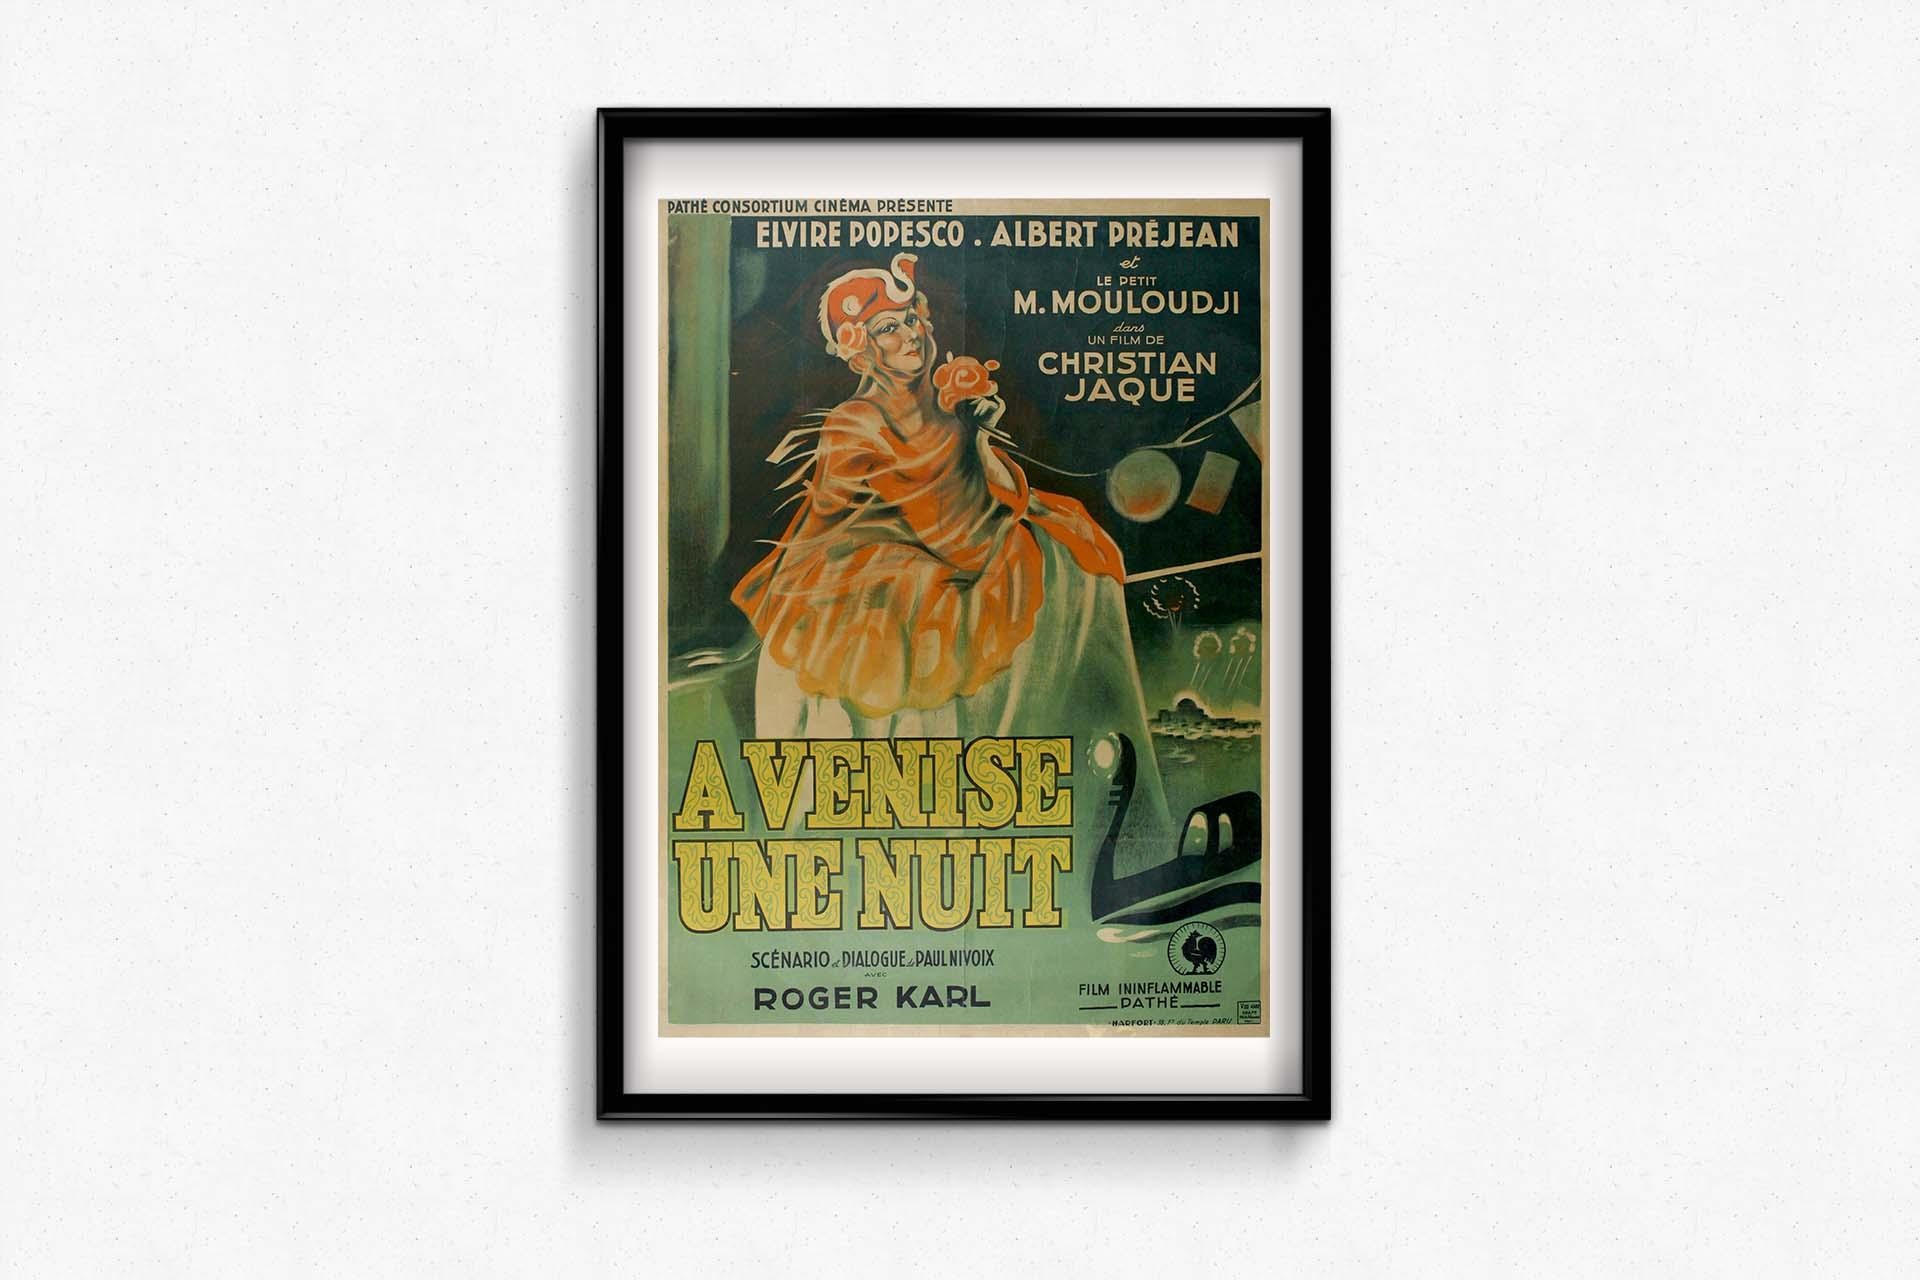 The 1937 original poster for 